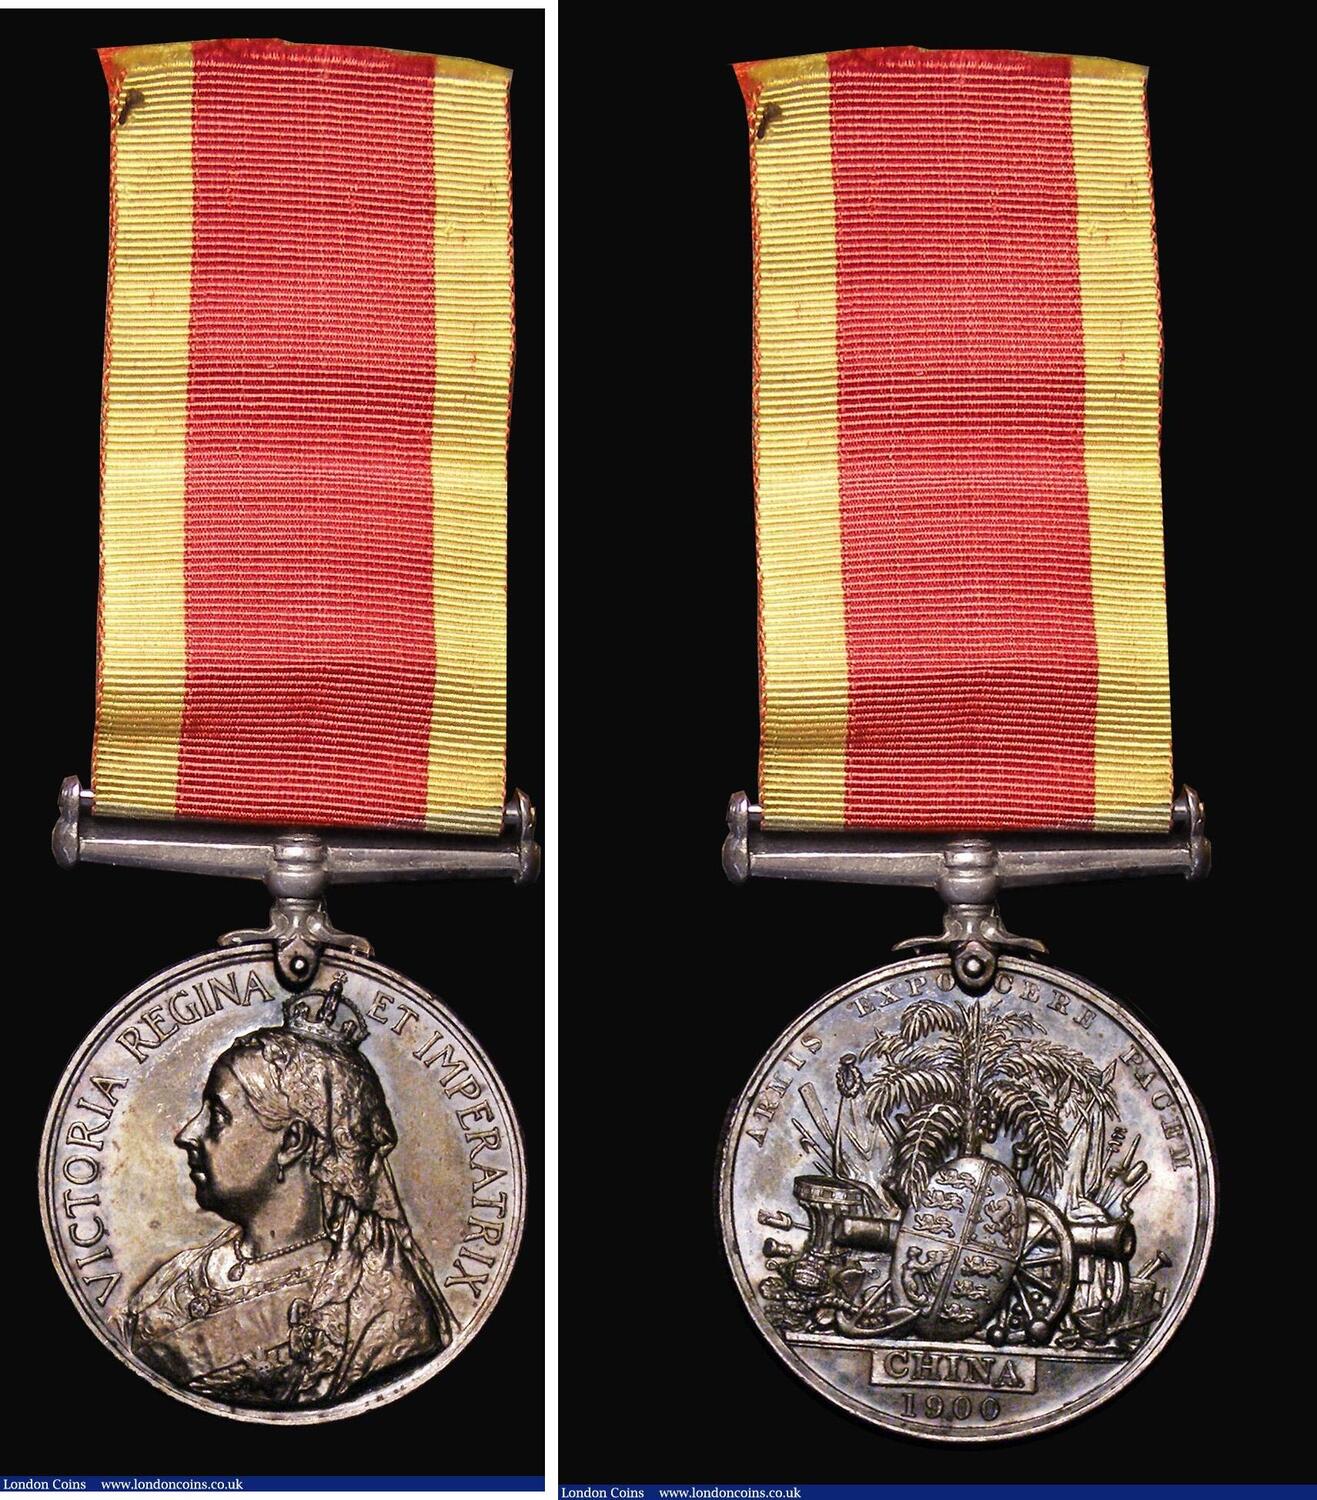 Queen Elizabeth II DG Britt Bravery in the field military award medal 